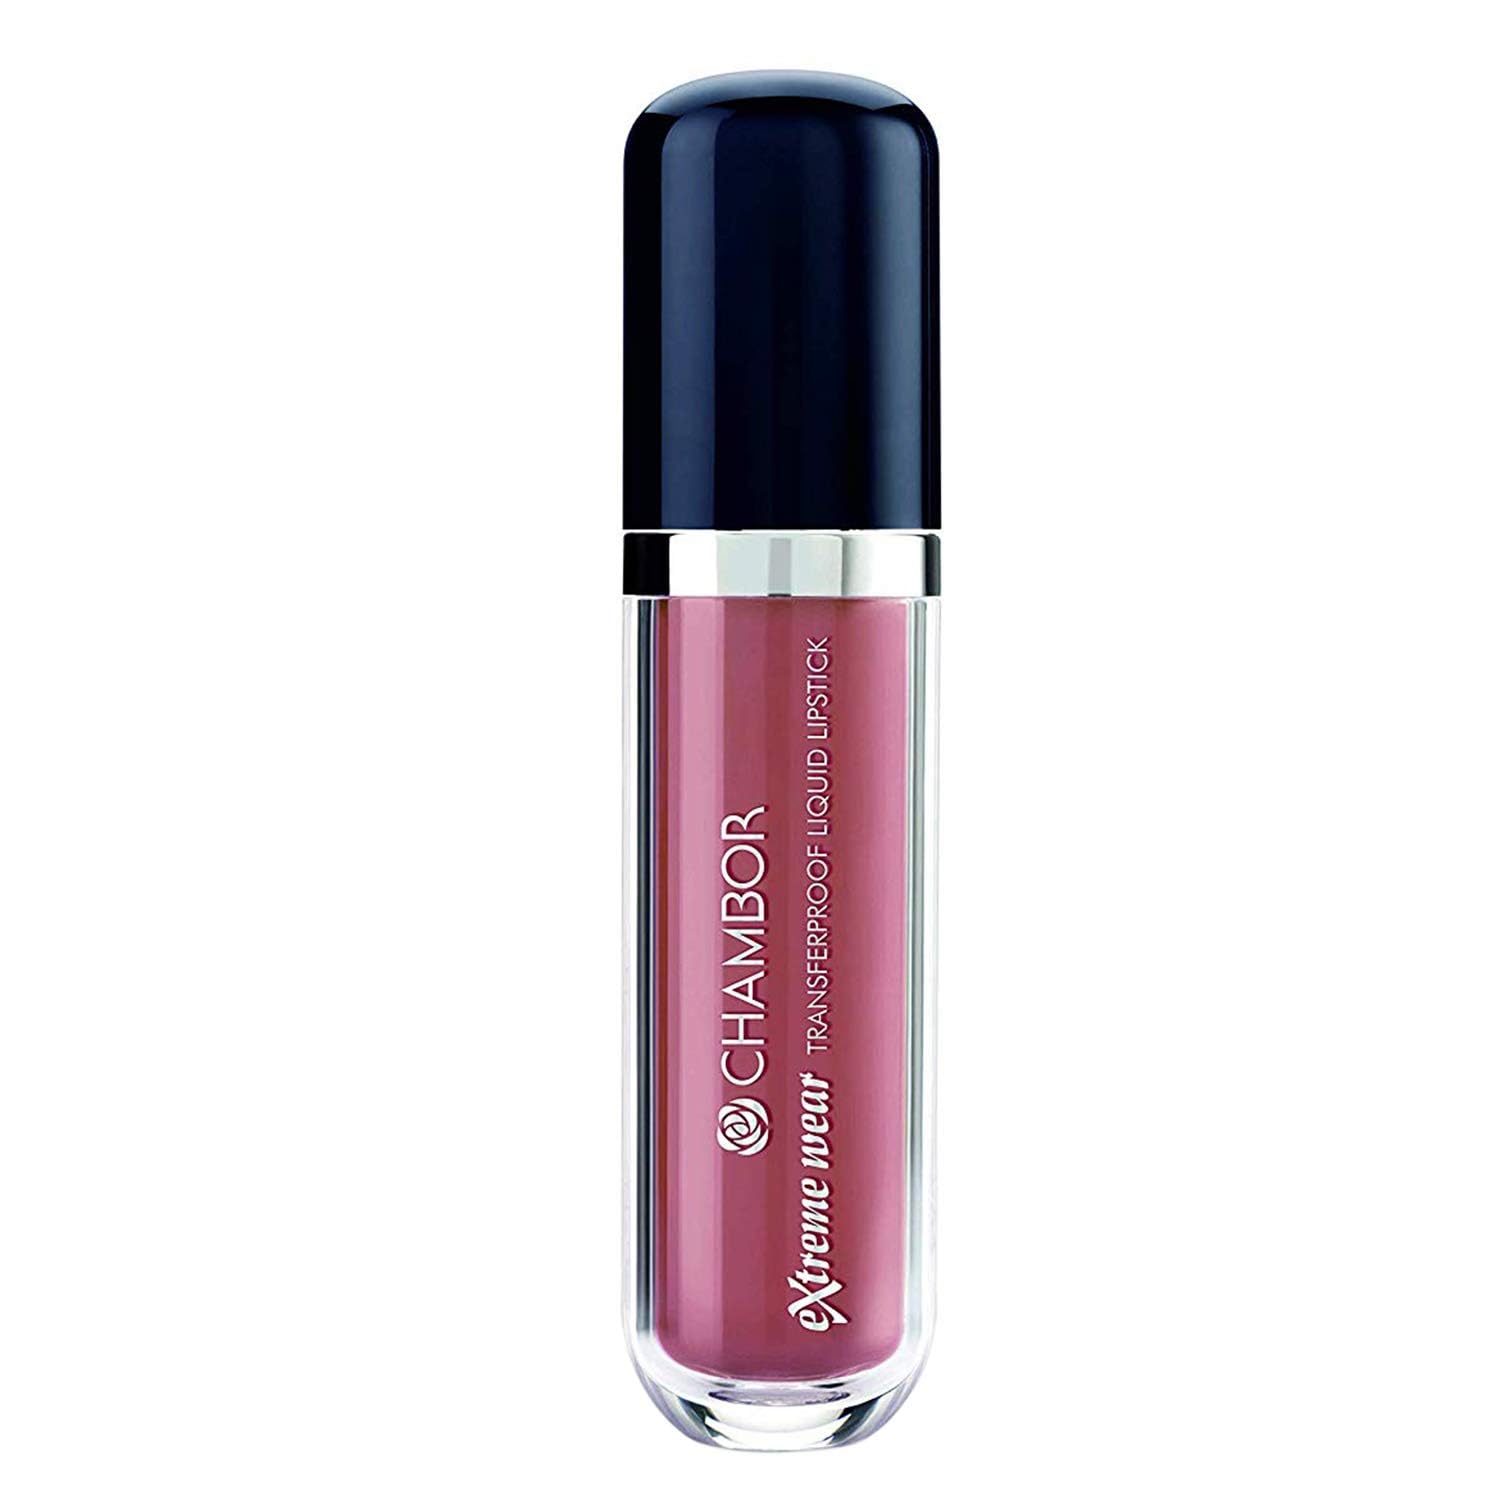 Chambor Extreme Wear Transferproof Liquid Lipstick - Effortless Pink #402